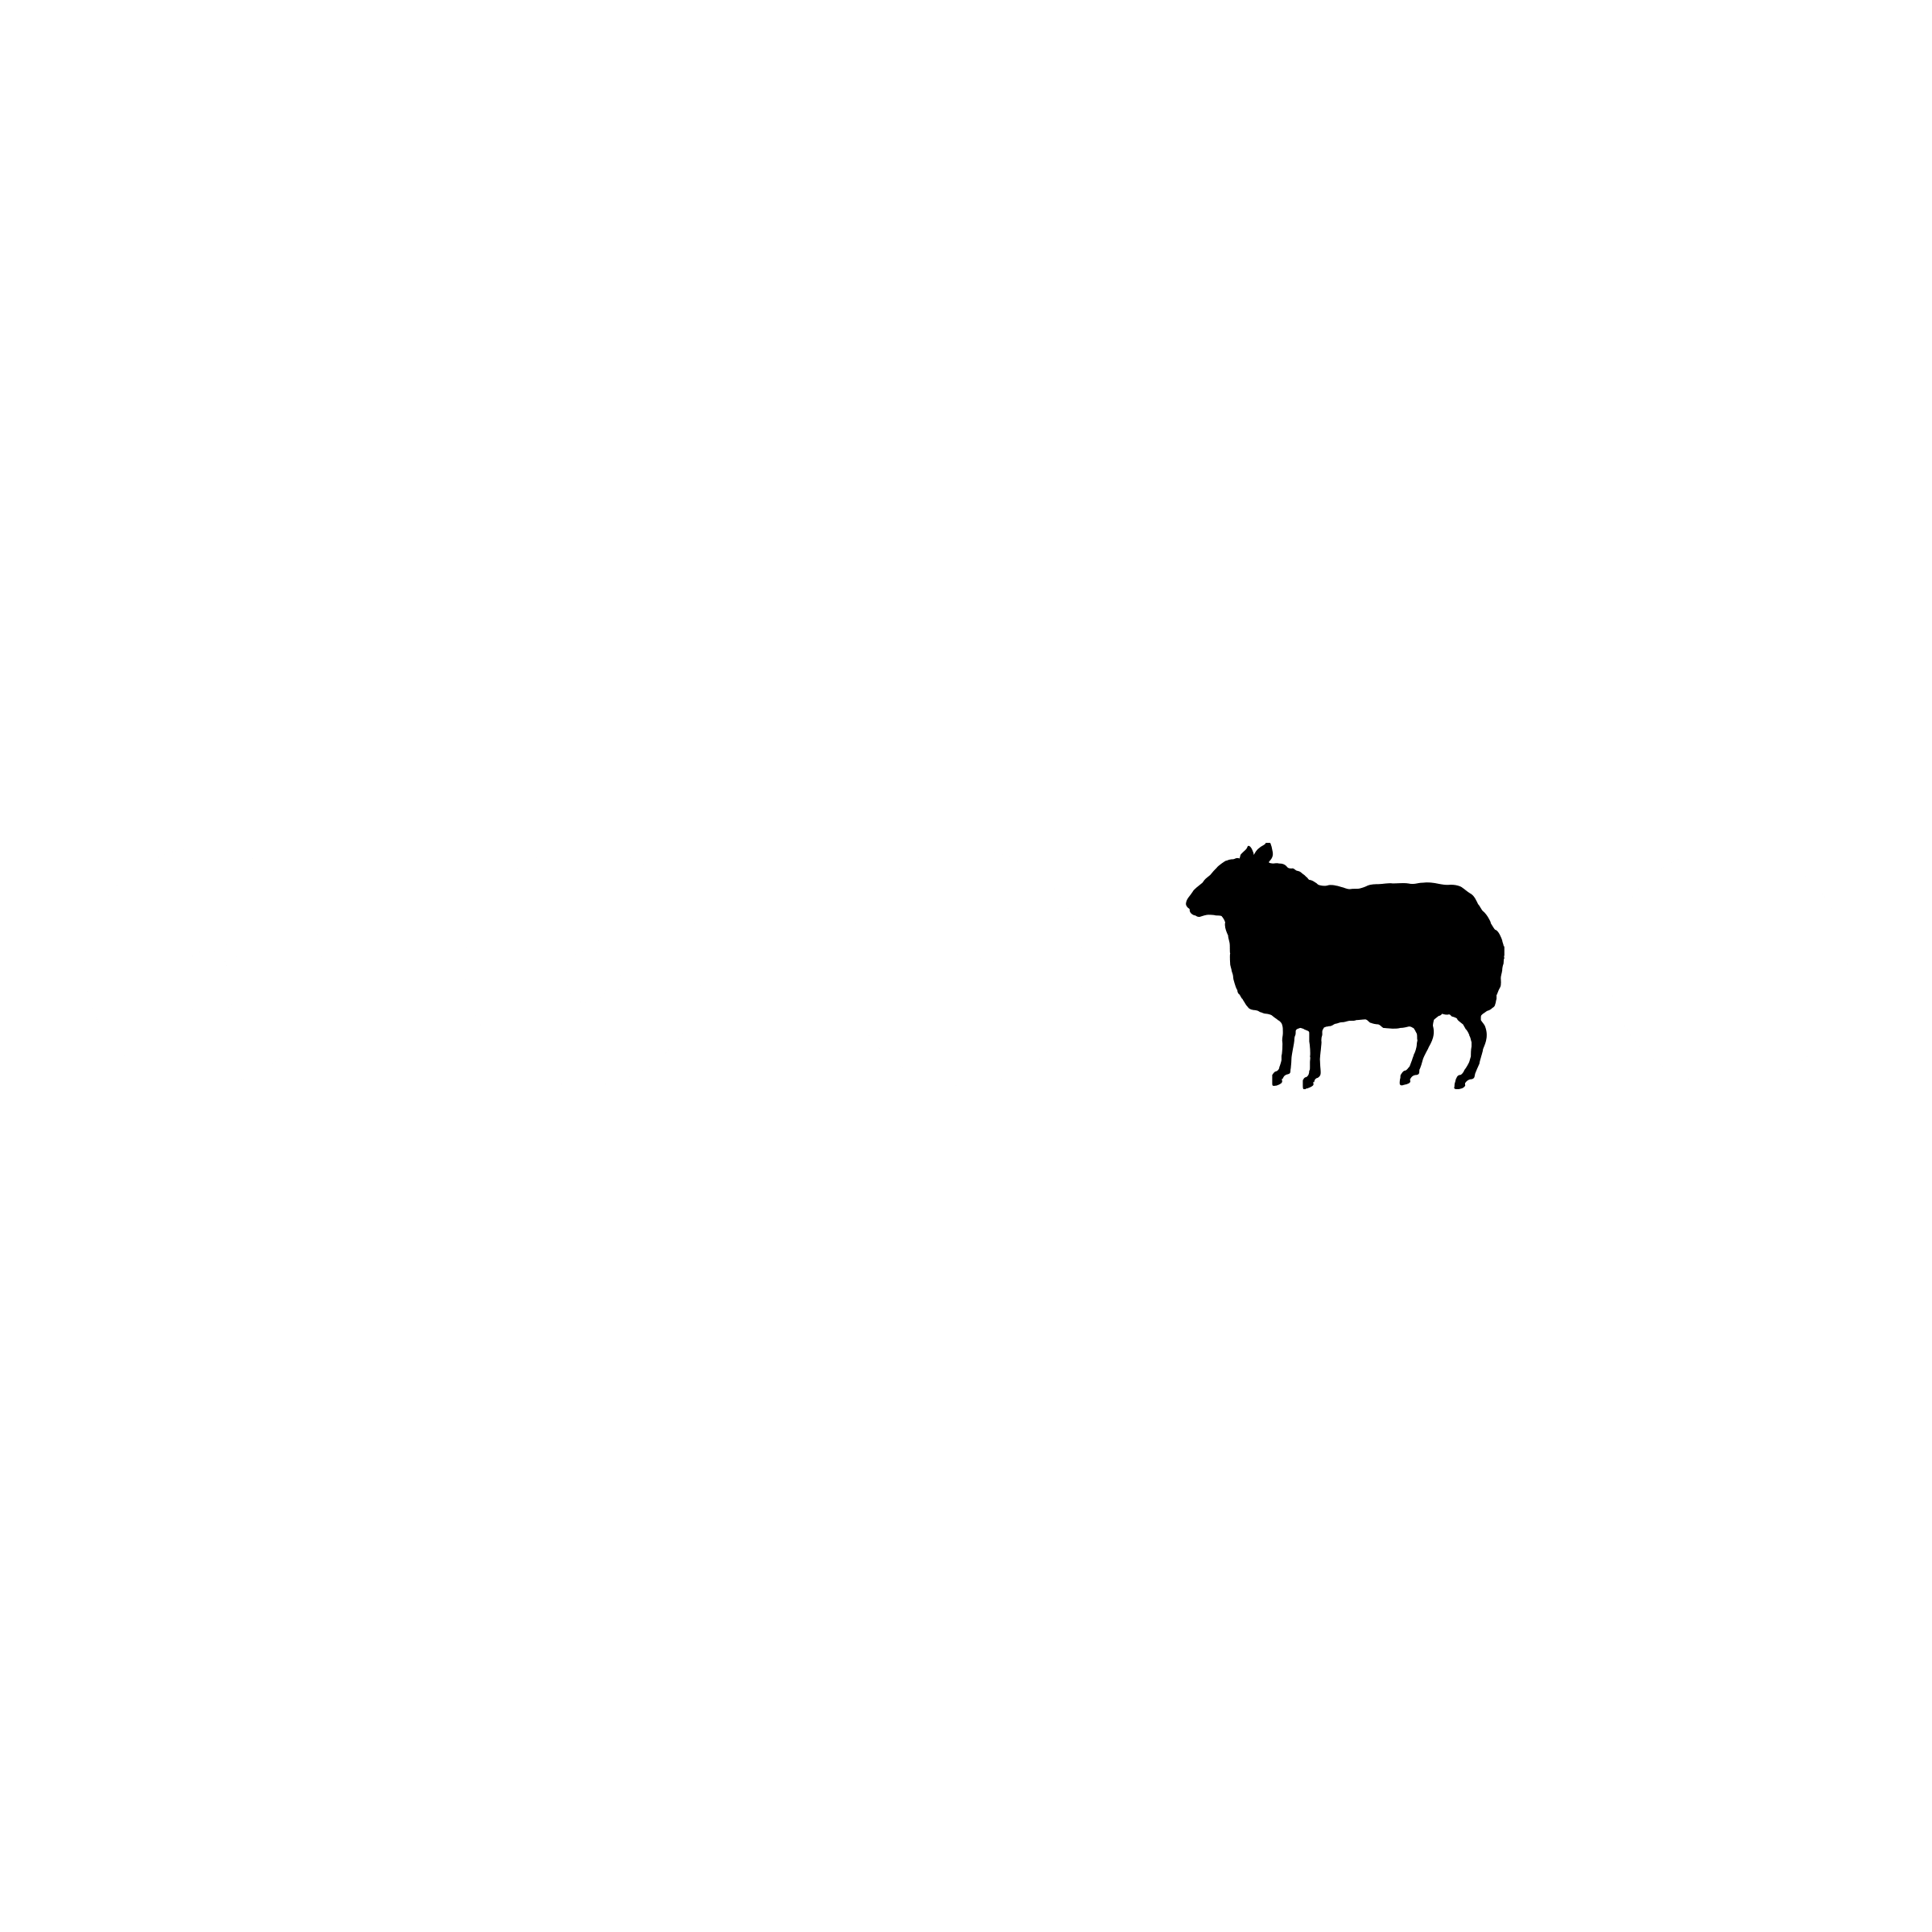 BBH Logo - BBH Logo PNG Transparent & SVG Vector - Freebie Supply